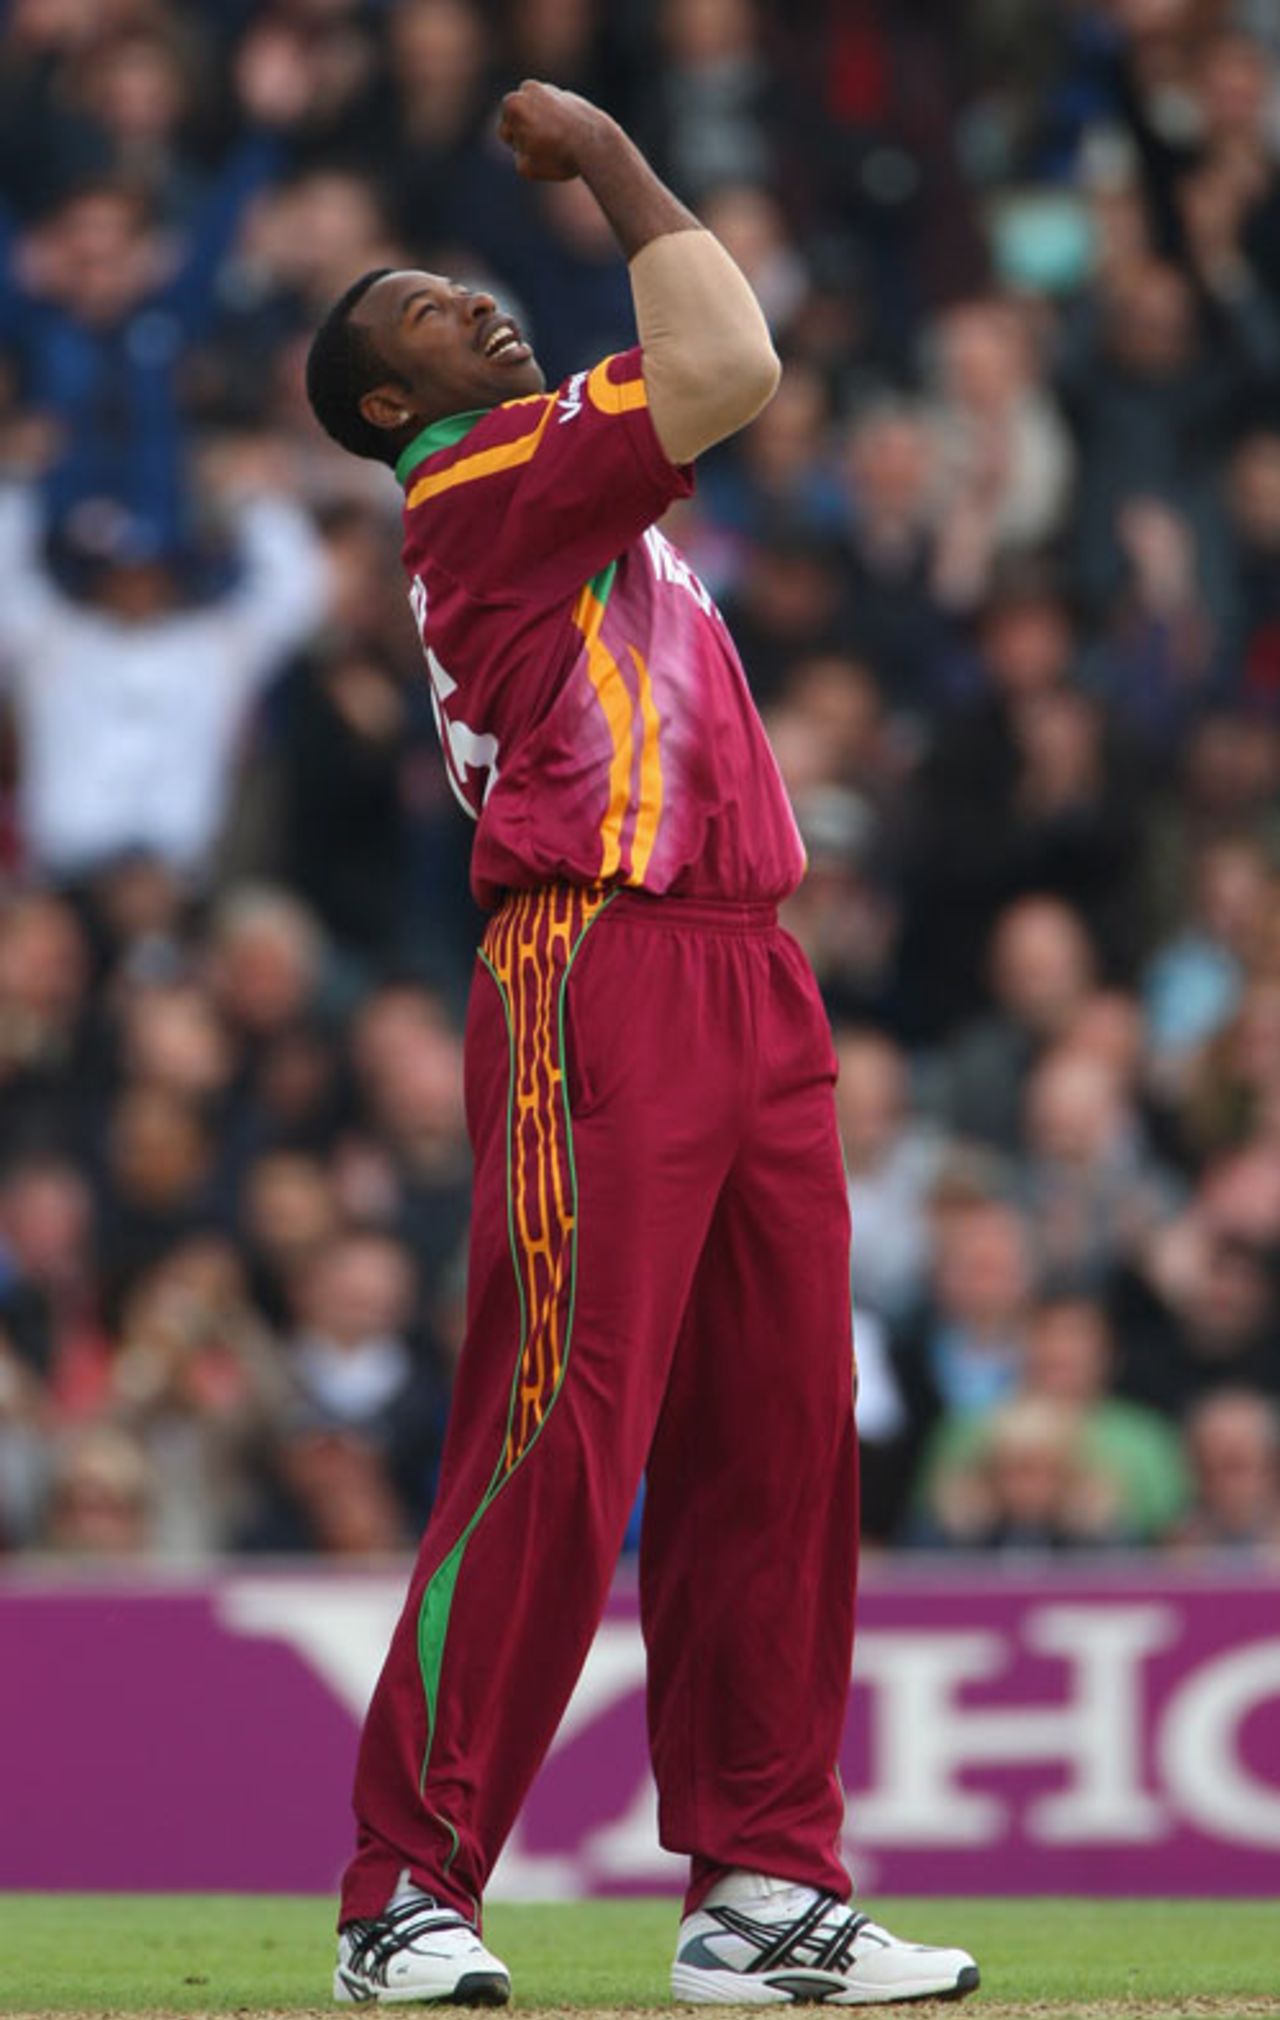 Kieron Pollard is mighty pleased after taking a wicket, Australia v West Indies, ICC World Twenty20, The Oval, June 6, 2009